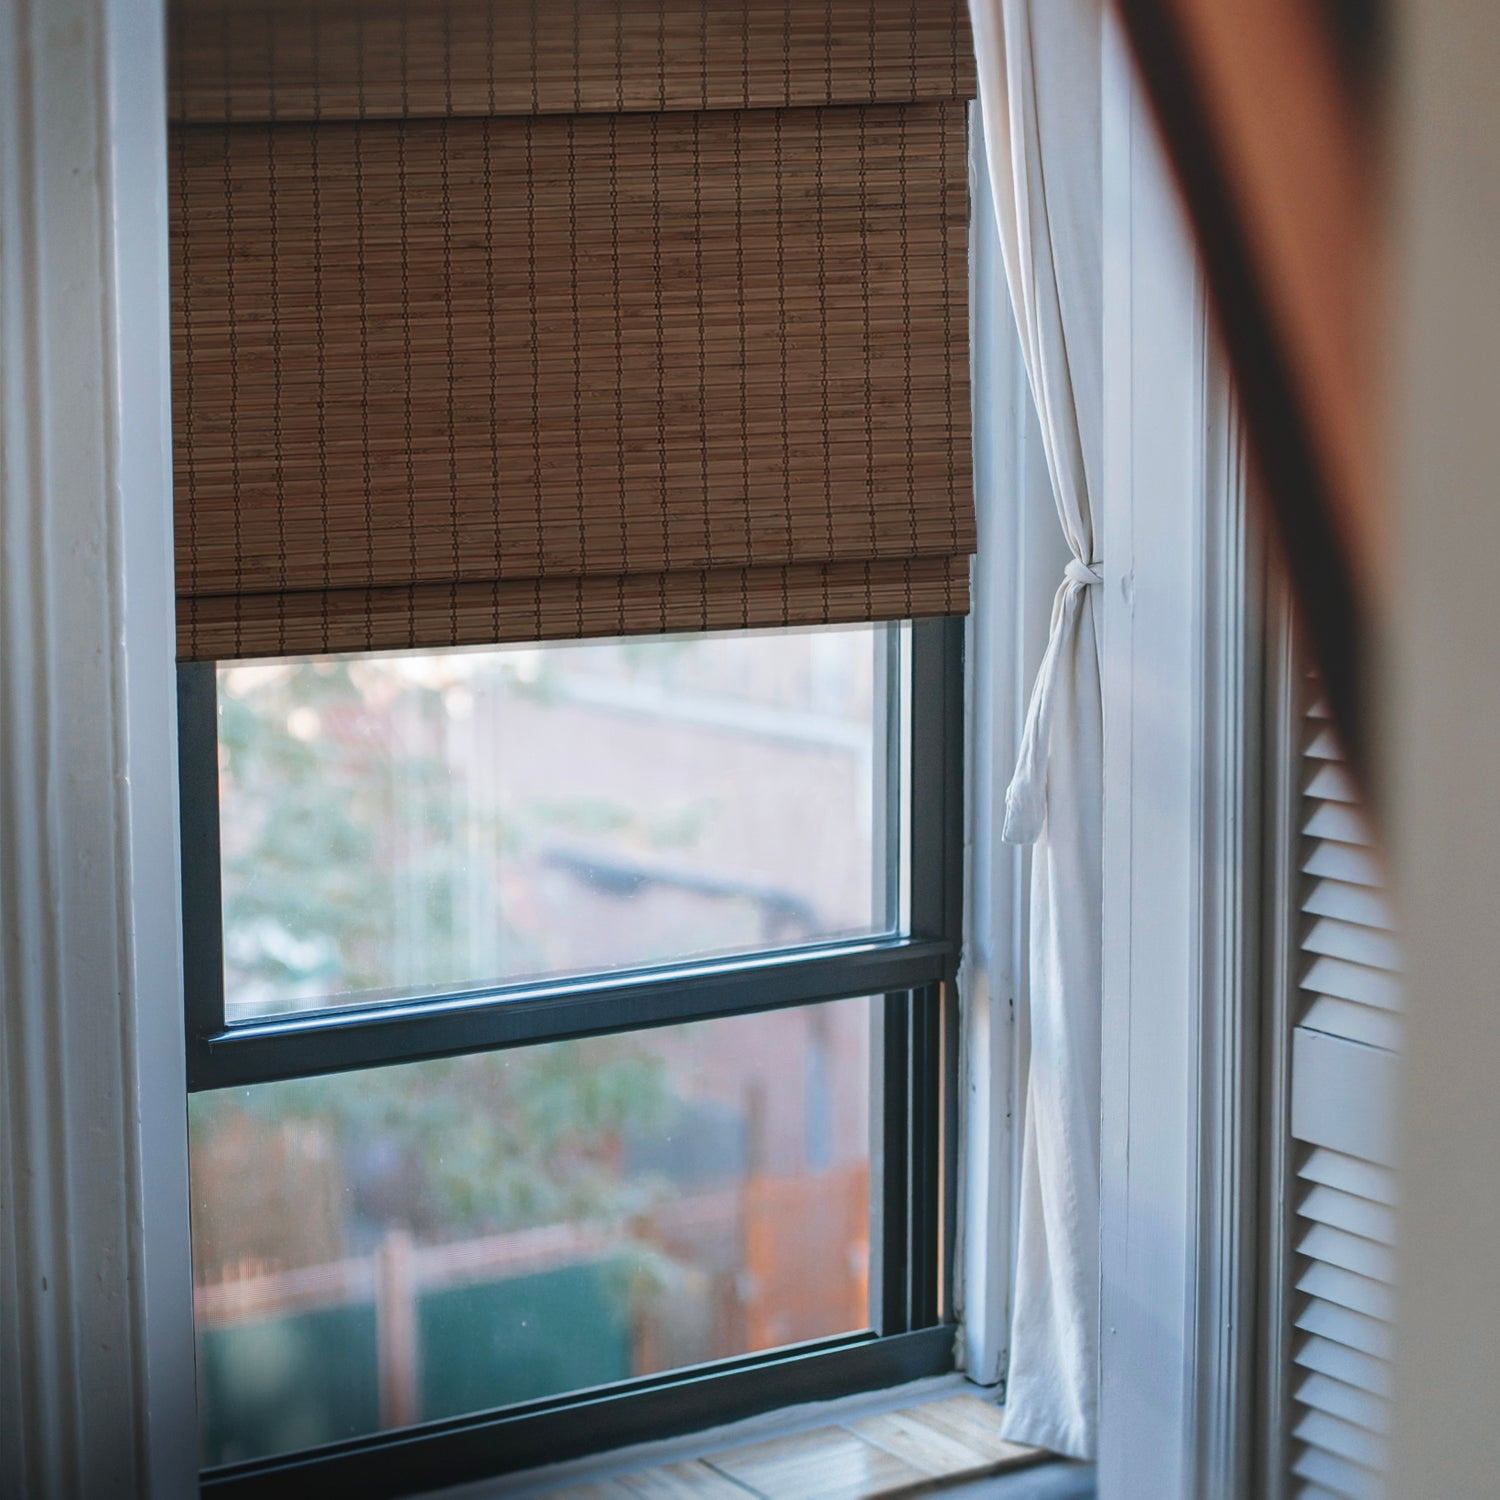 24"x66" Bamboo Flat-Weave Slat Stick Roll Up Blinds Window Sun Filtering Shade 